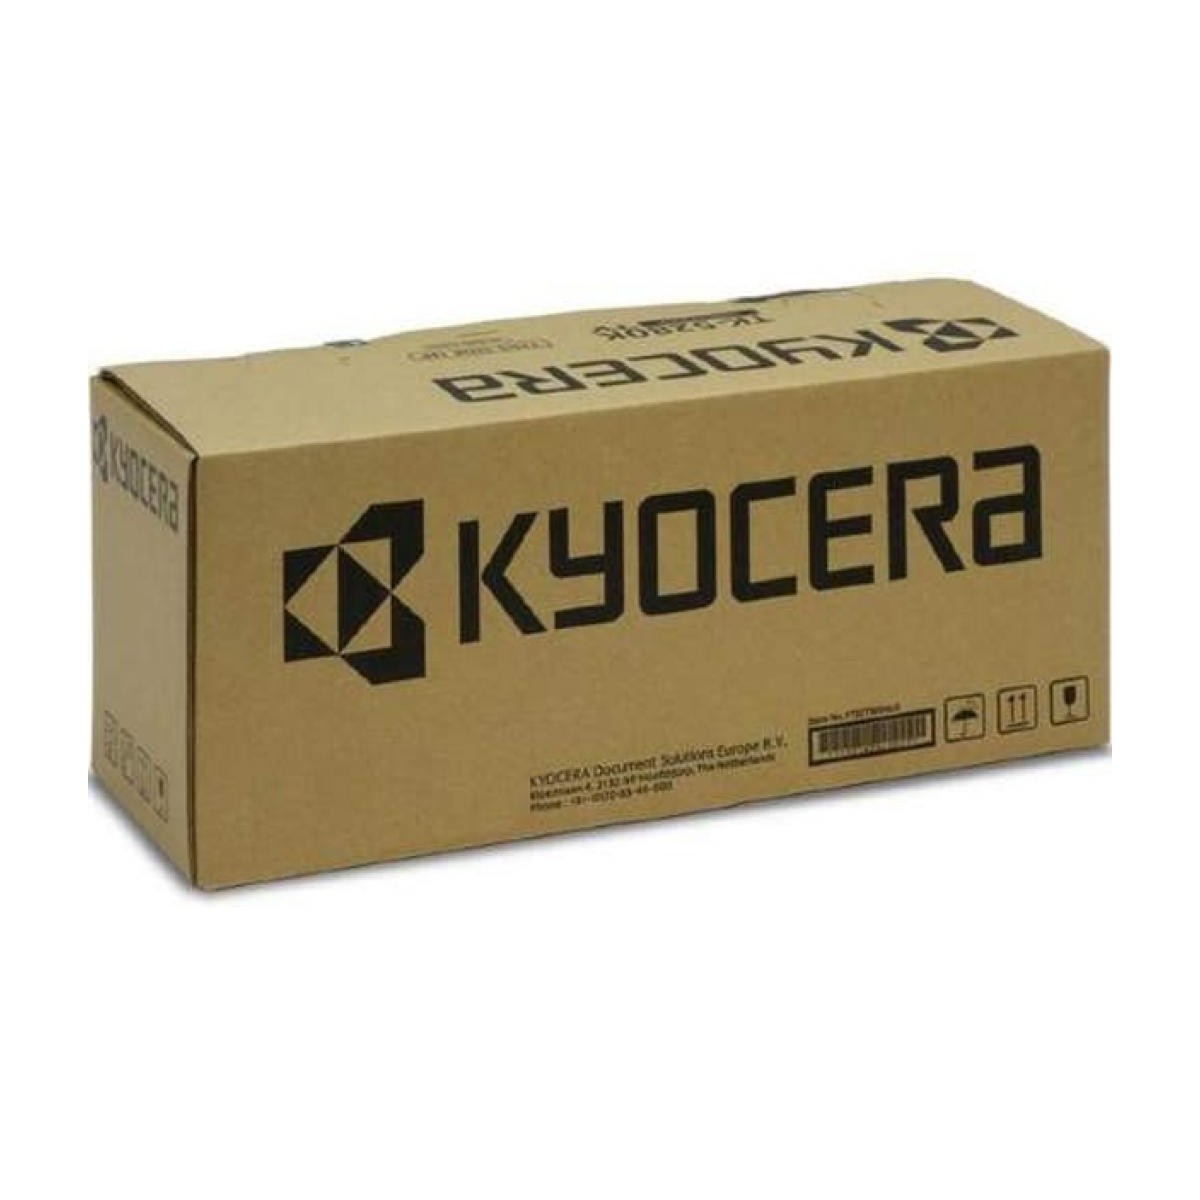 Kyocera Drum Unit FS-C8020/C8025/TASKalfa 205c/255c> DK-896